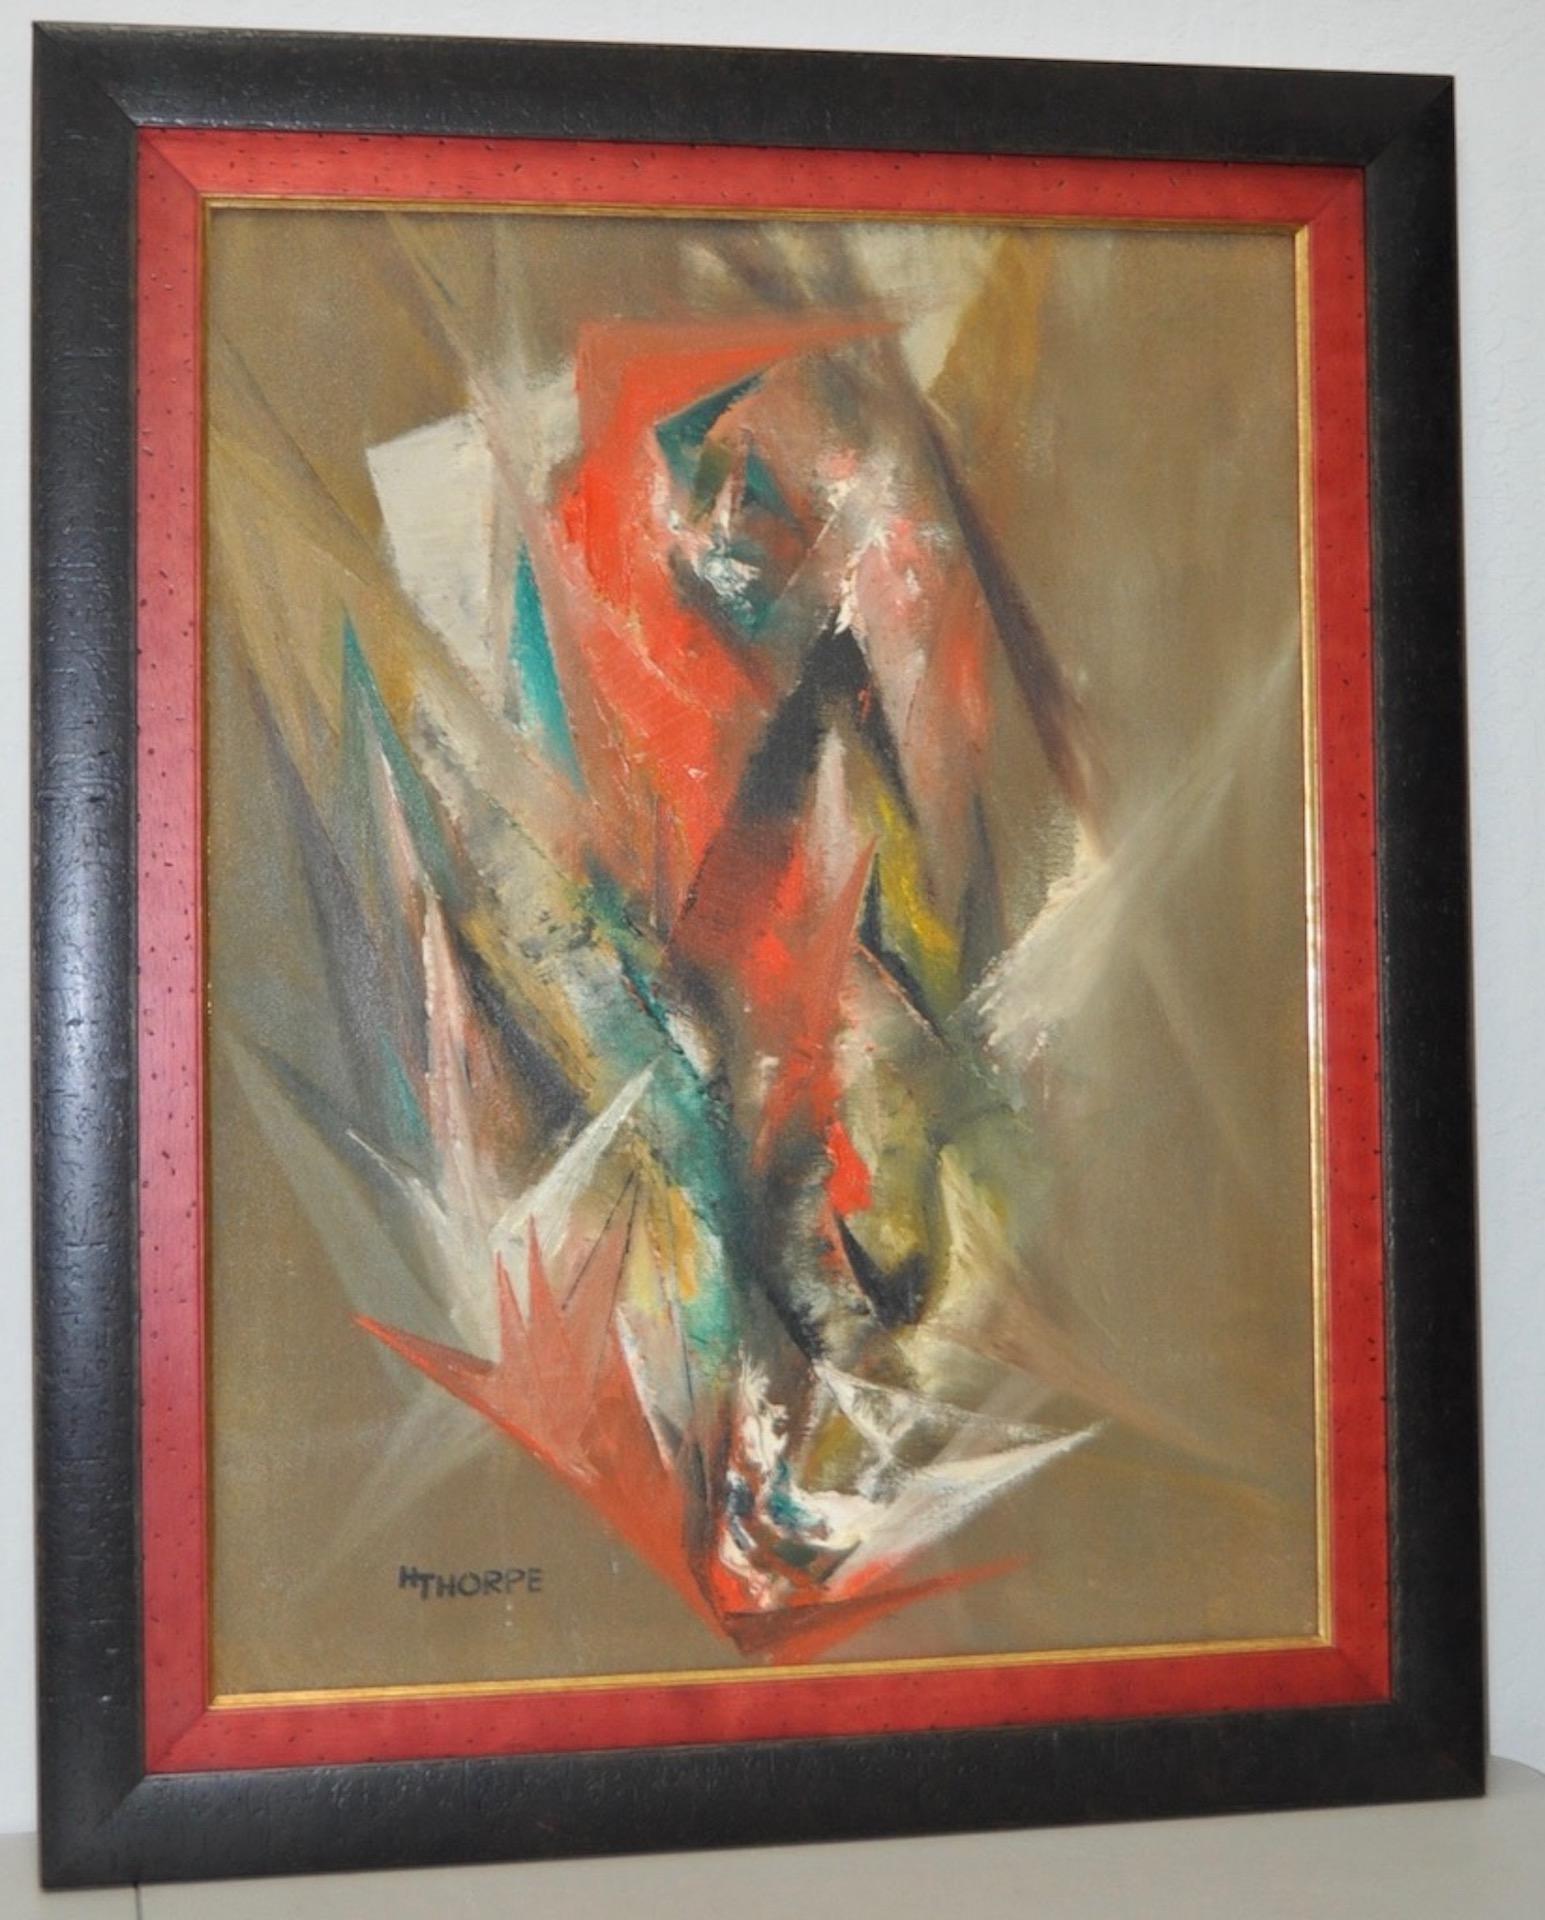 Harriet Thorpe "Fire Bird" Original Abstract Oil Painting c.1960s - Art by Hariet Thorpe